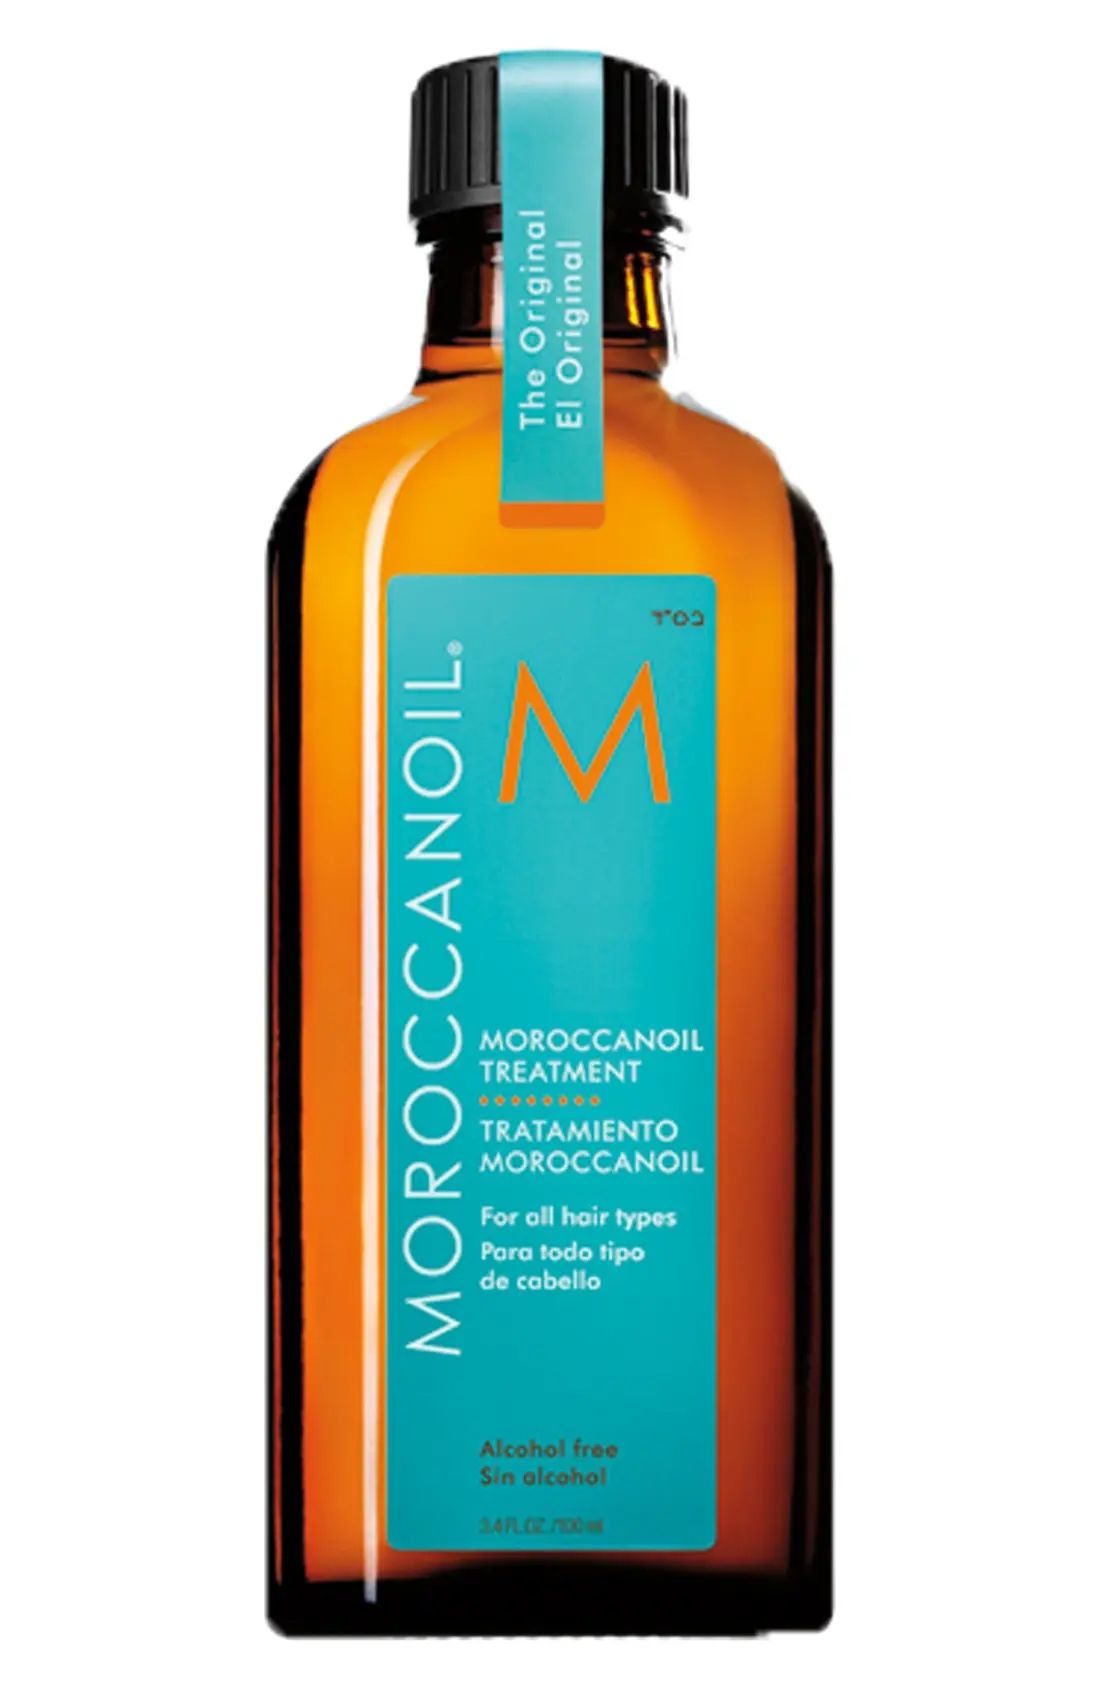 Moroccanoil Treatment, Size 0.85 oz | Nordstrom